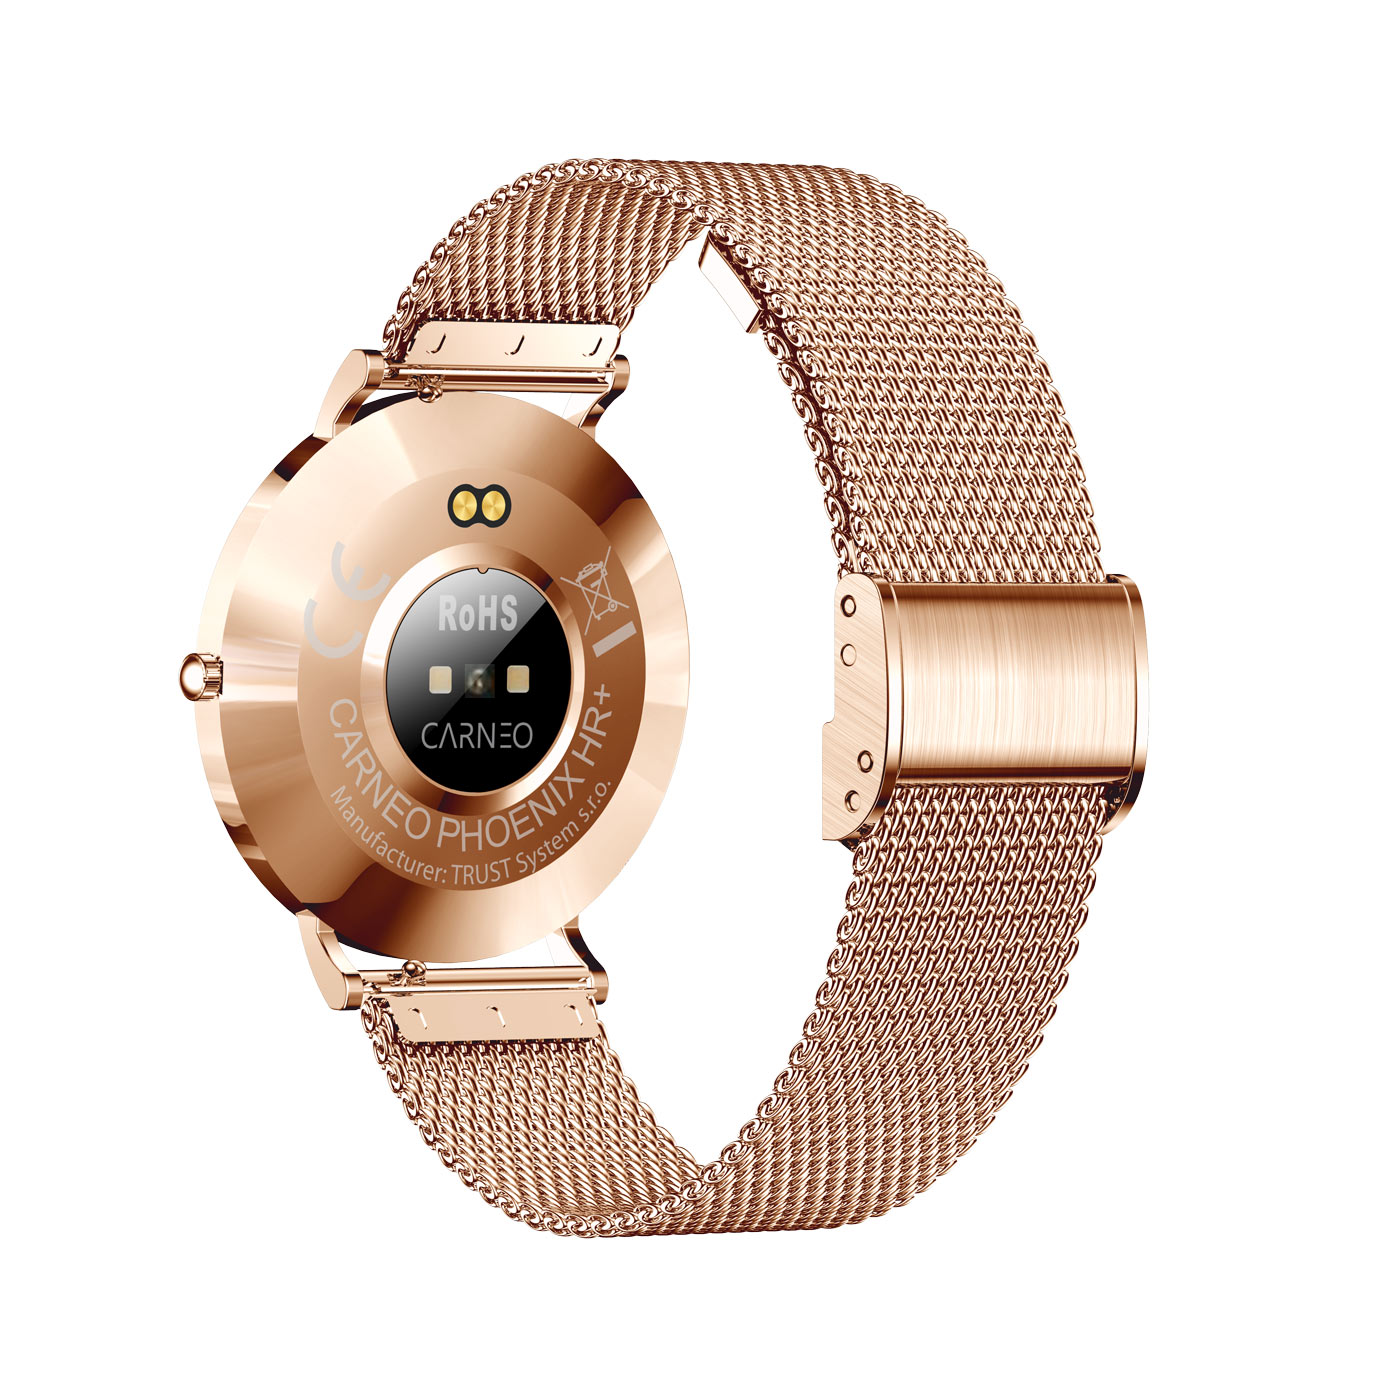 CARNEO Phoenix HR+ gold dünn, Gold Smartwatch